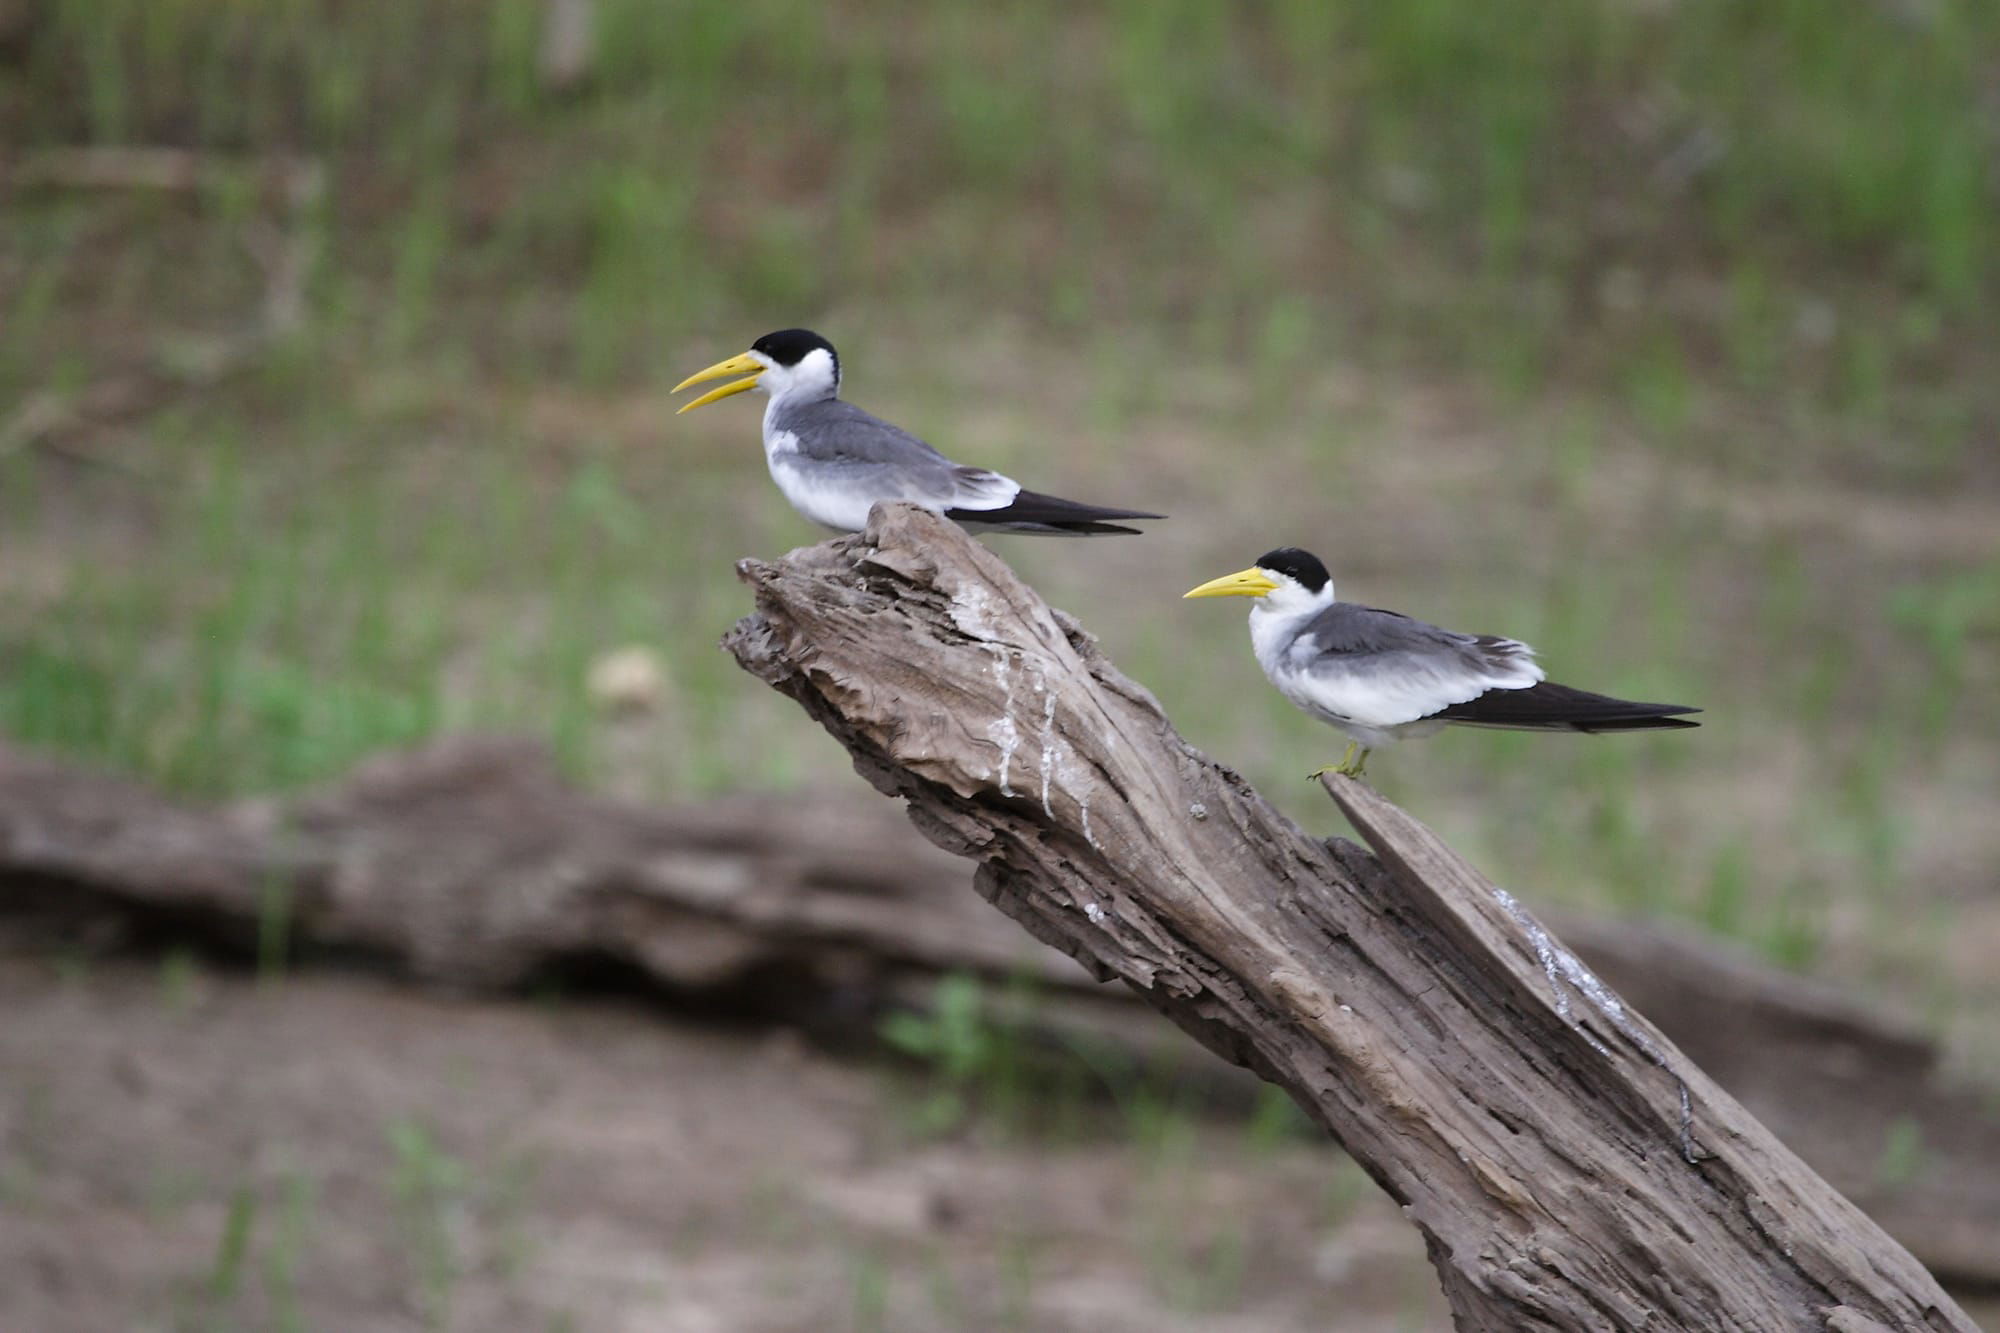 Large-billed Terns